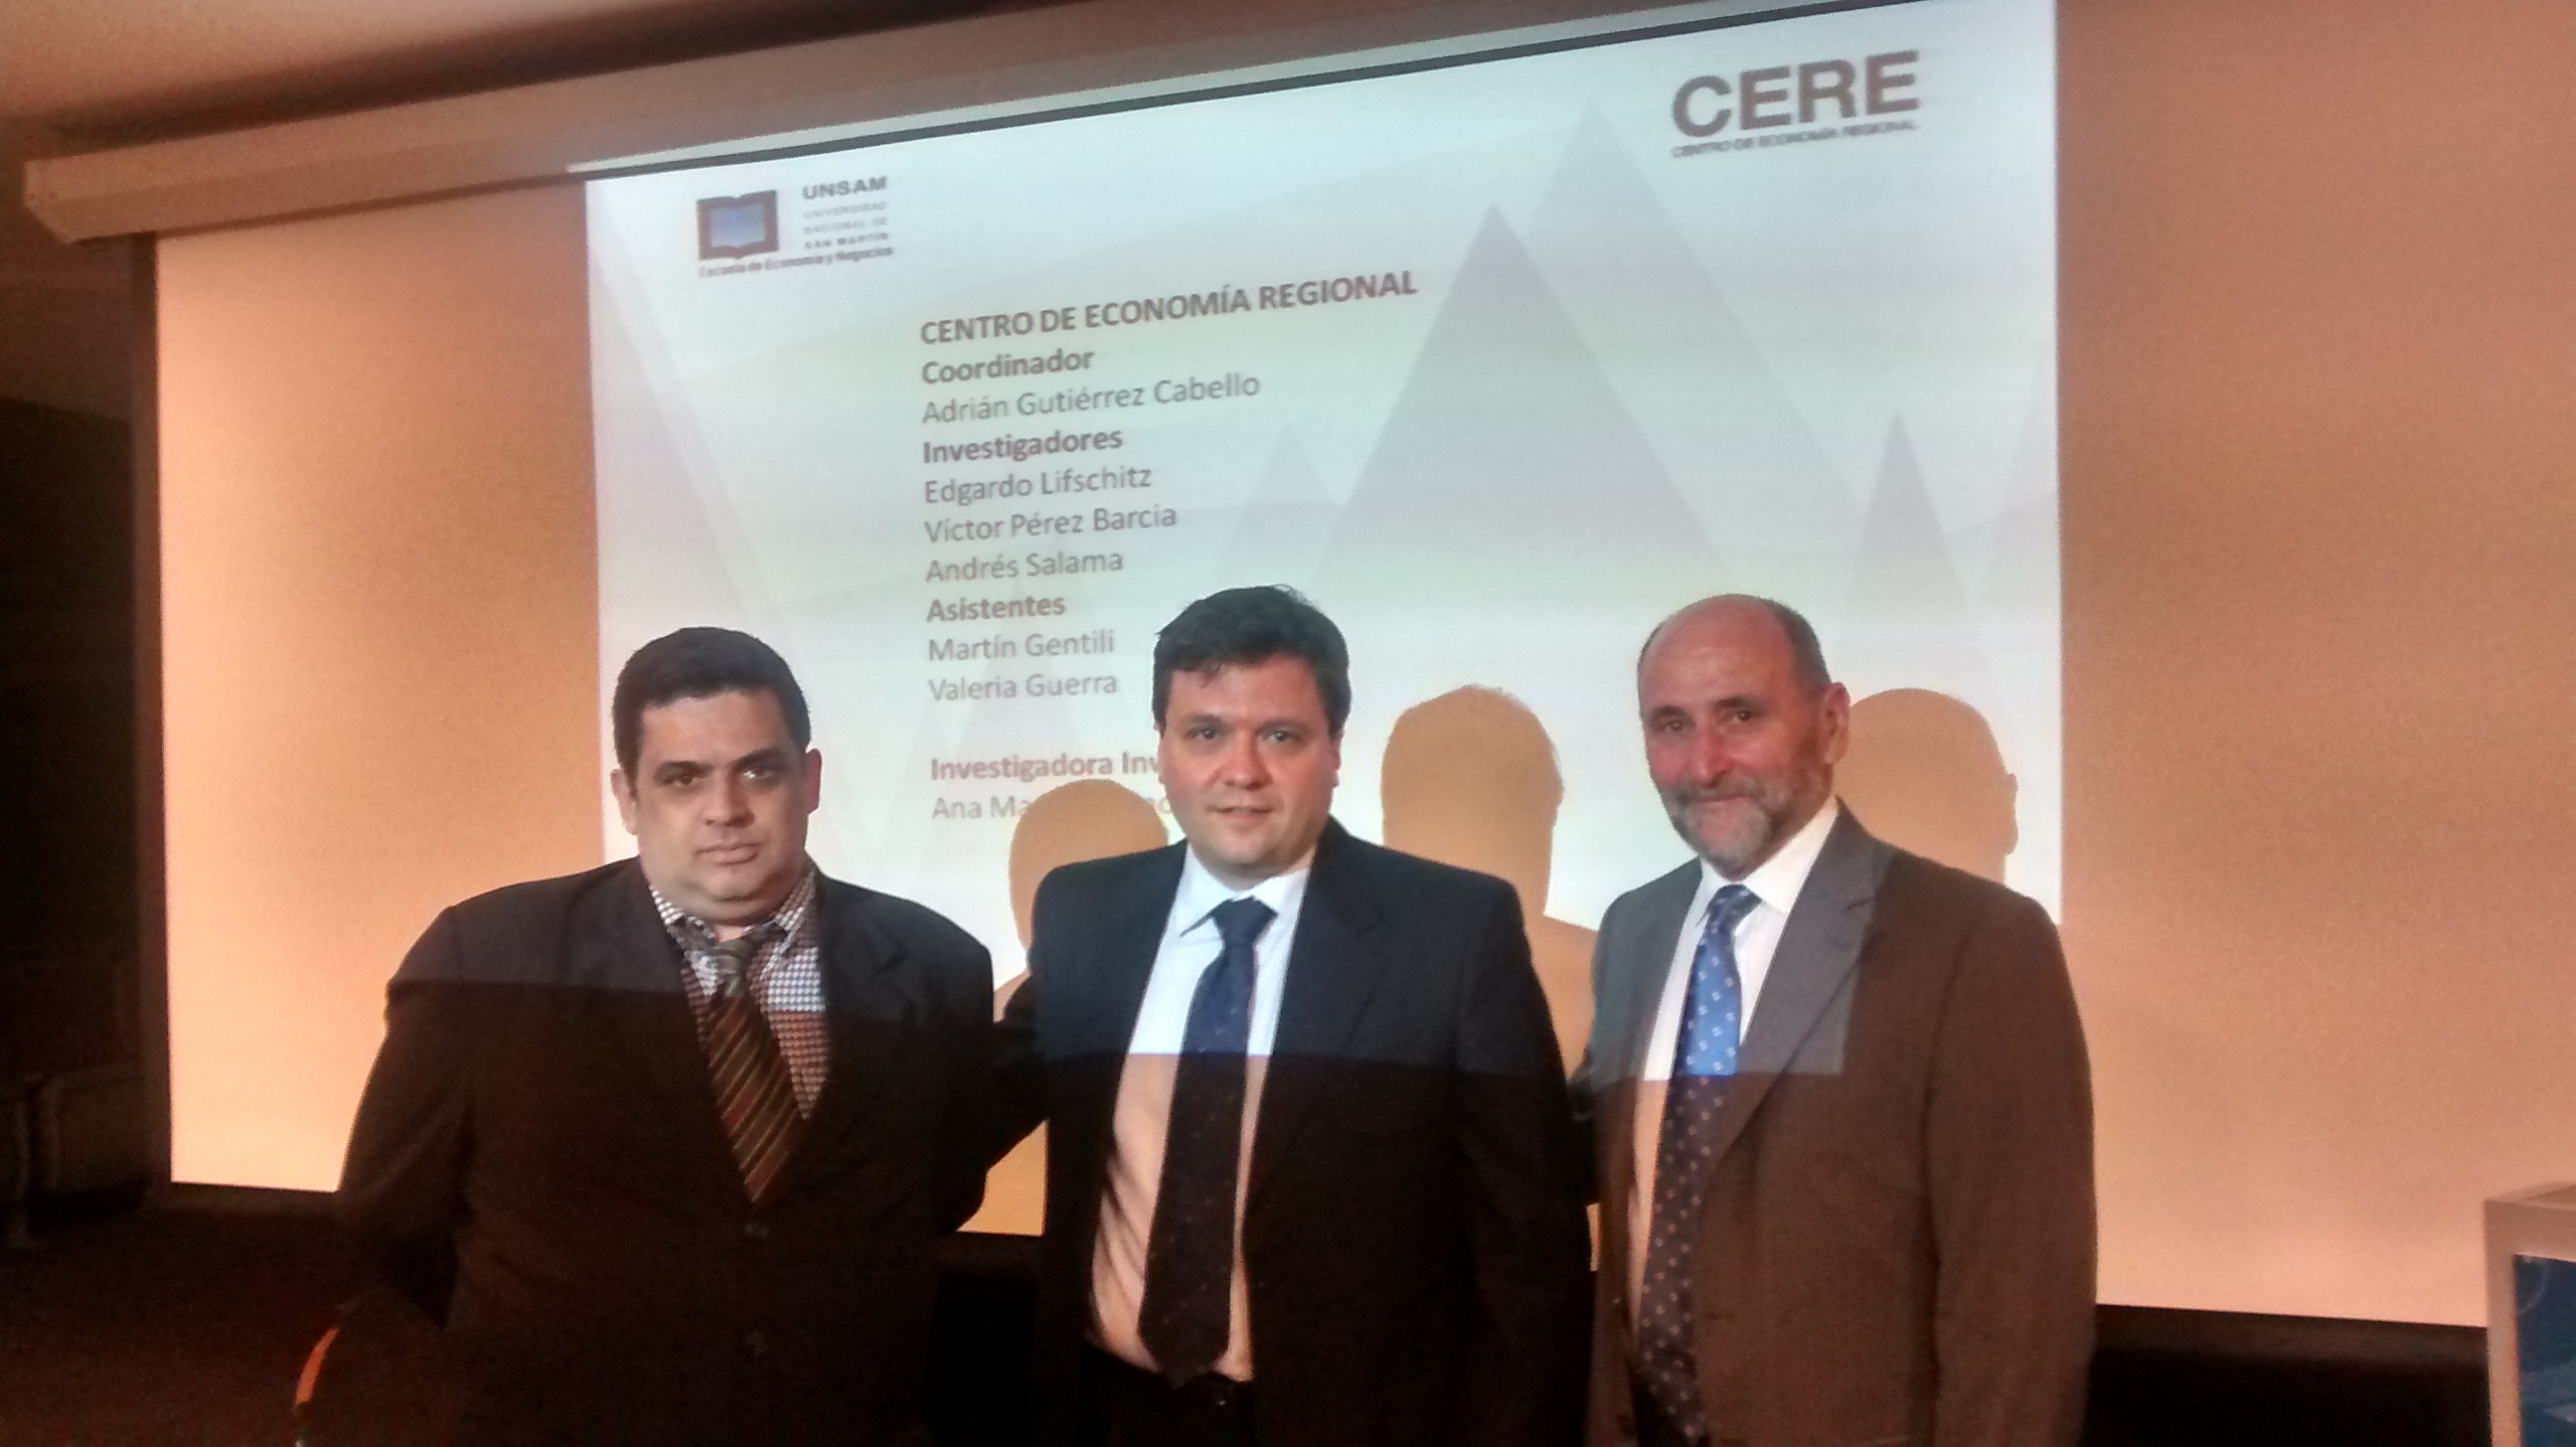 Andrés Salama, Adrian Gutiérrez Cabello y Edgardo Lifschitz